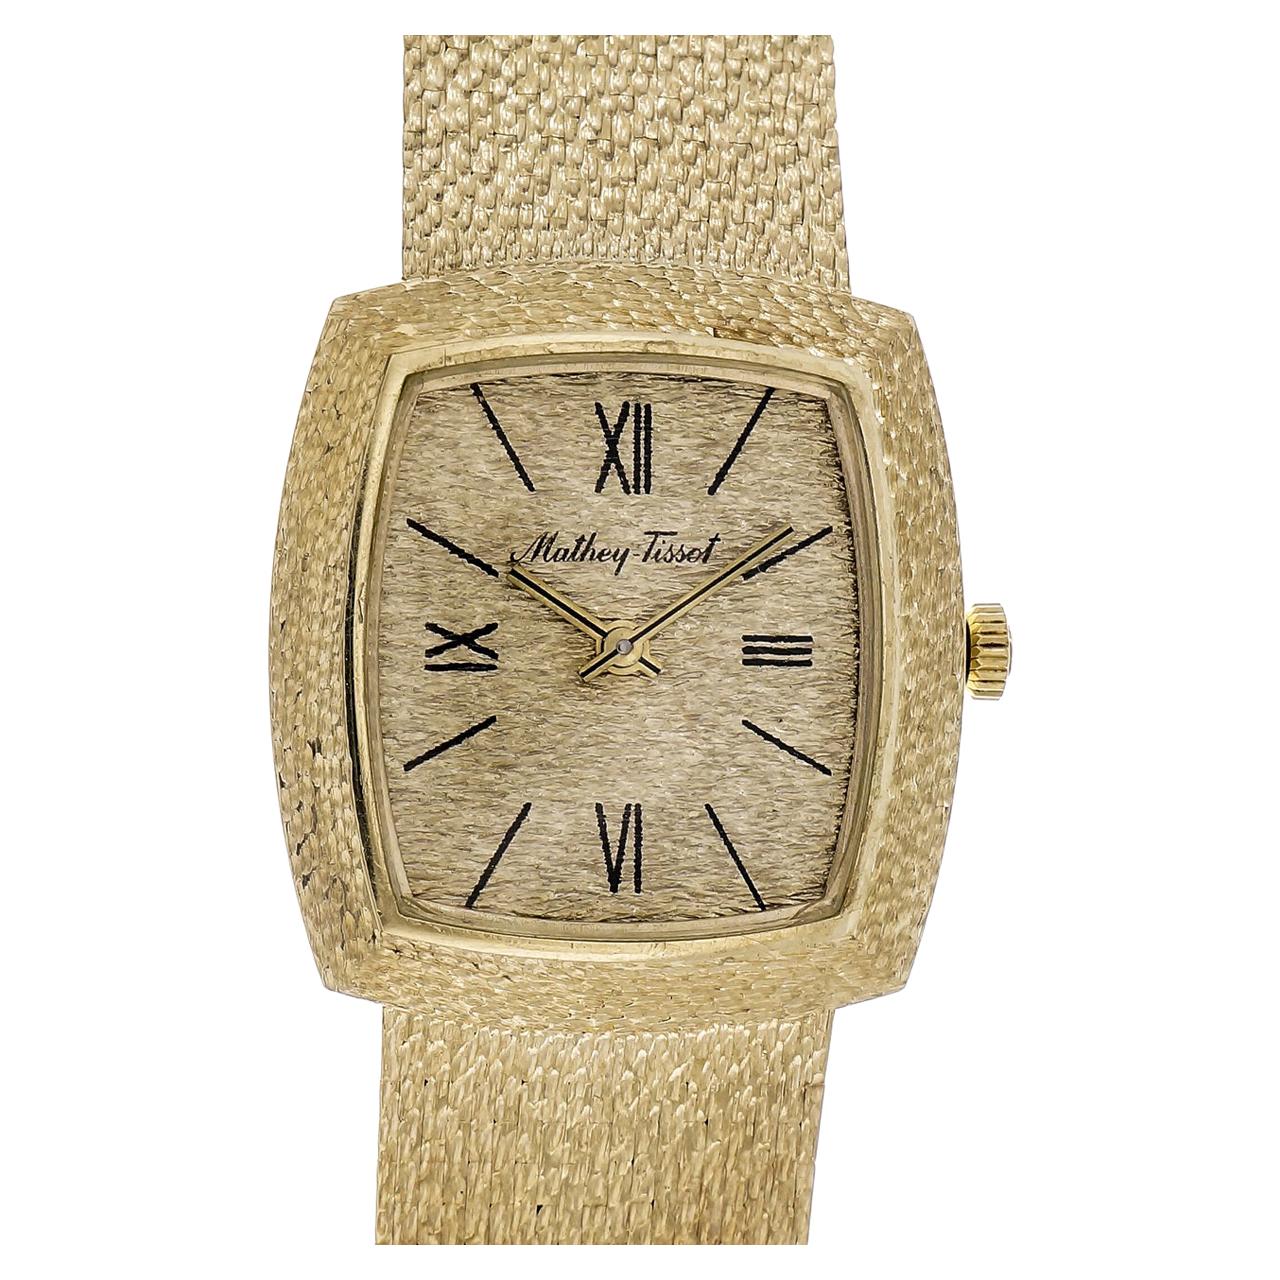 Mathey Tissot 1960 Textured 14k Gold Wrist Watch